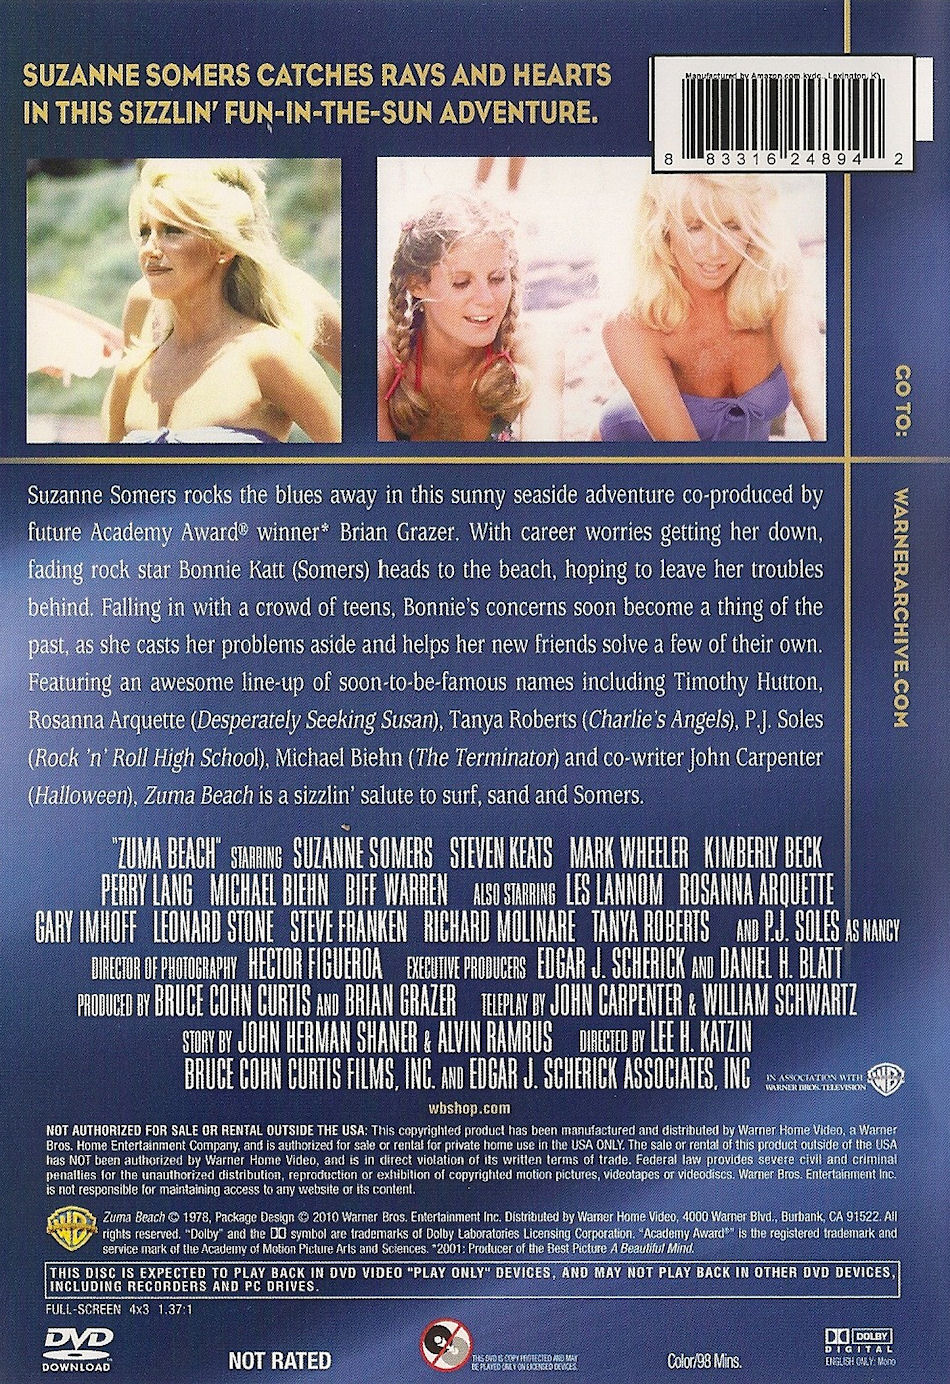 Zuma Beach - Region 2 DVD Cover - BACK
Keywords: ;media_cover